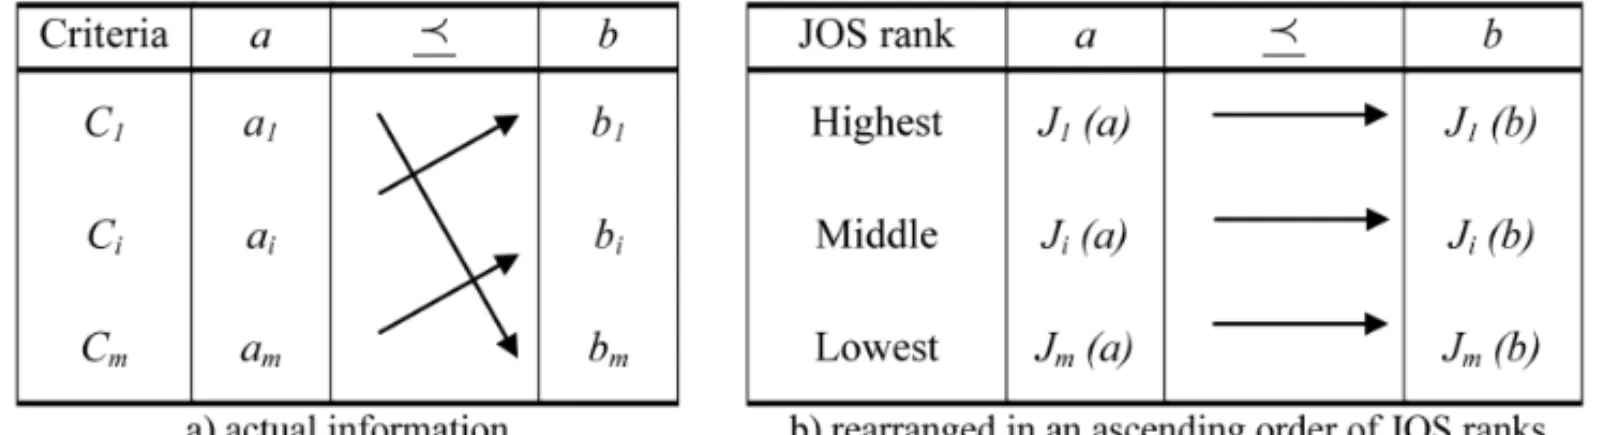 Figure 4 – Comparison of real alternatives upon JOS: ( J 1 (x) ≺ J 2 (x) ≺ ∙ ∙ ∙ ≺ J m (x)) (adapted from Moshkovich et al., 2002).